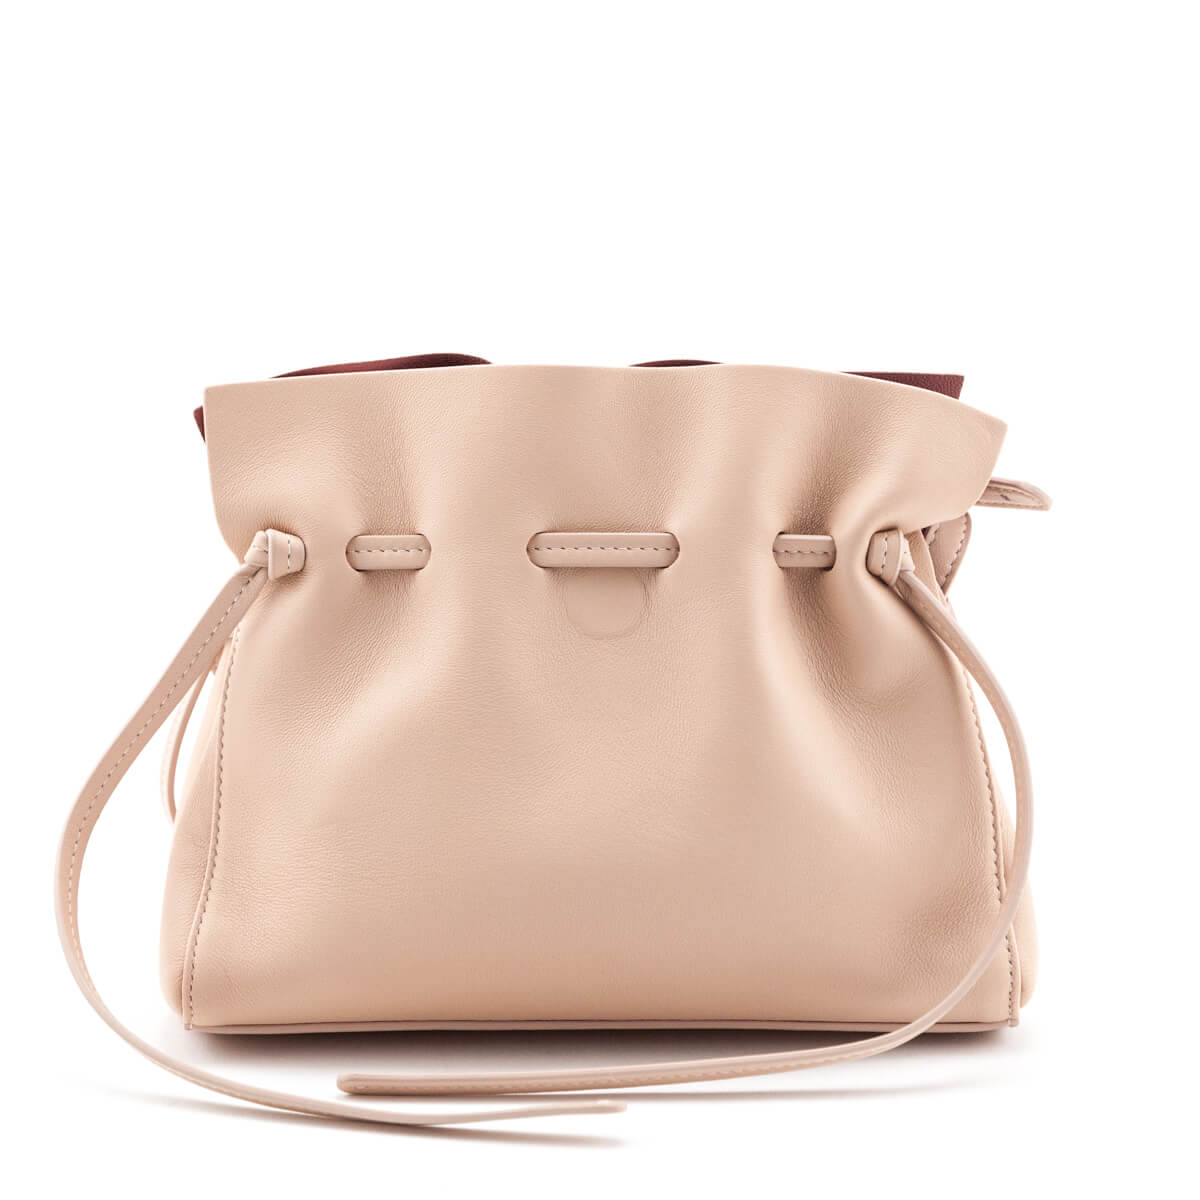 Mansur Gavriel Rosa & Blush Lambskin Mini Protea Bag - Love that Bag etc - Preowned Authentic Designer Handbags & Preloved Fashions